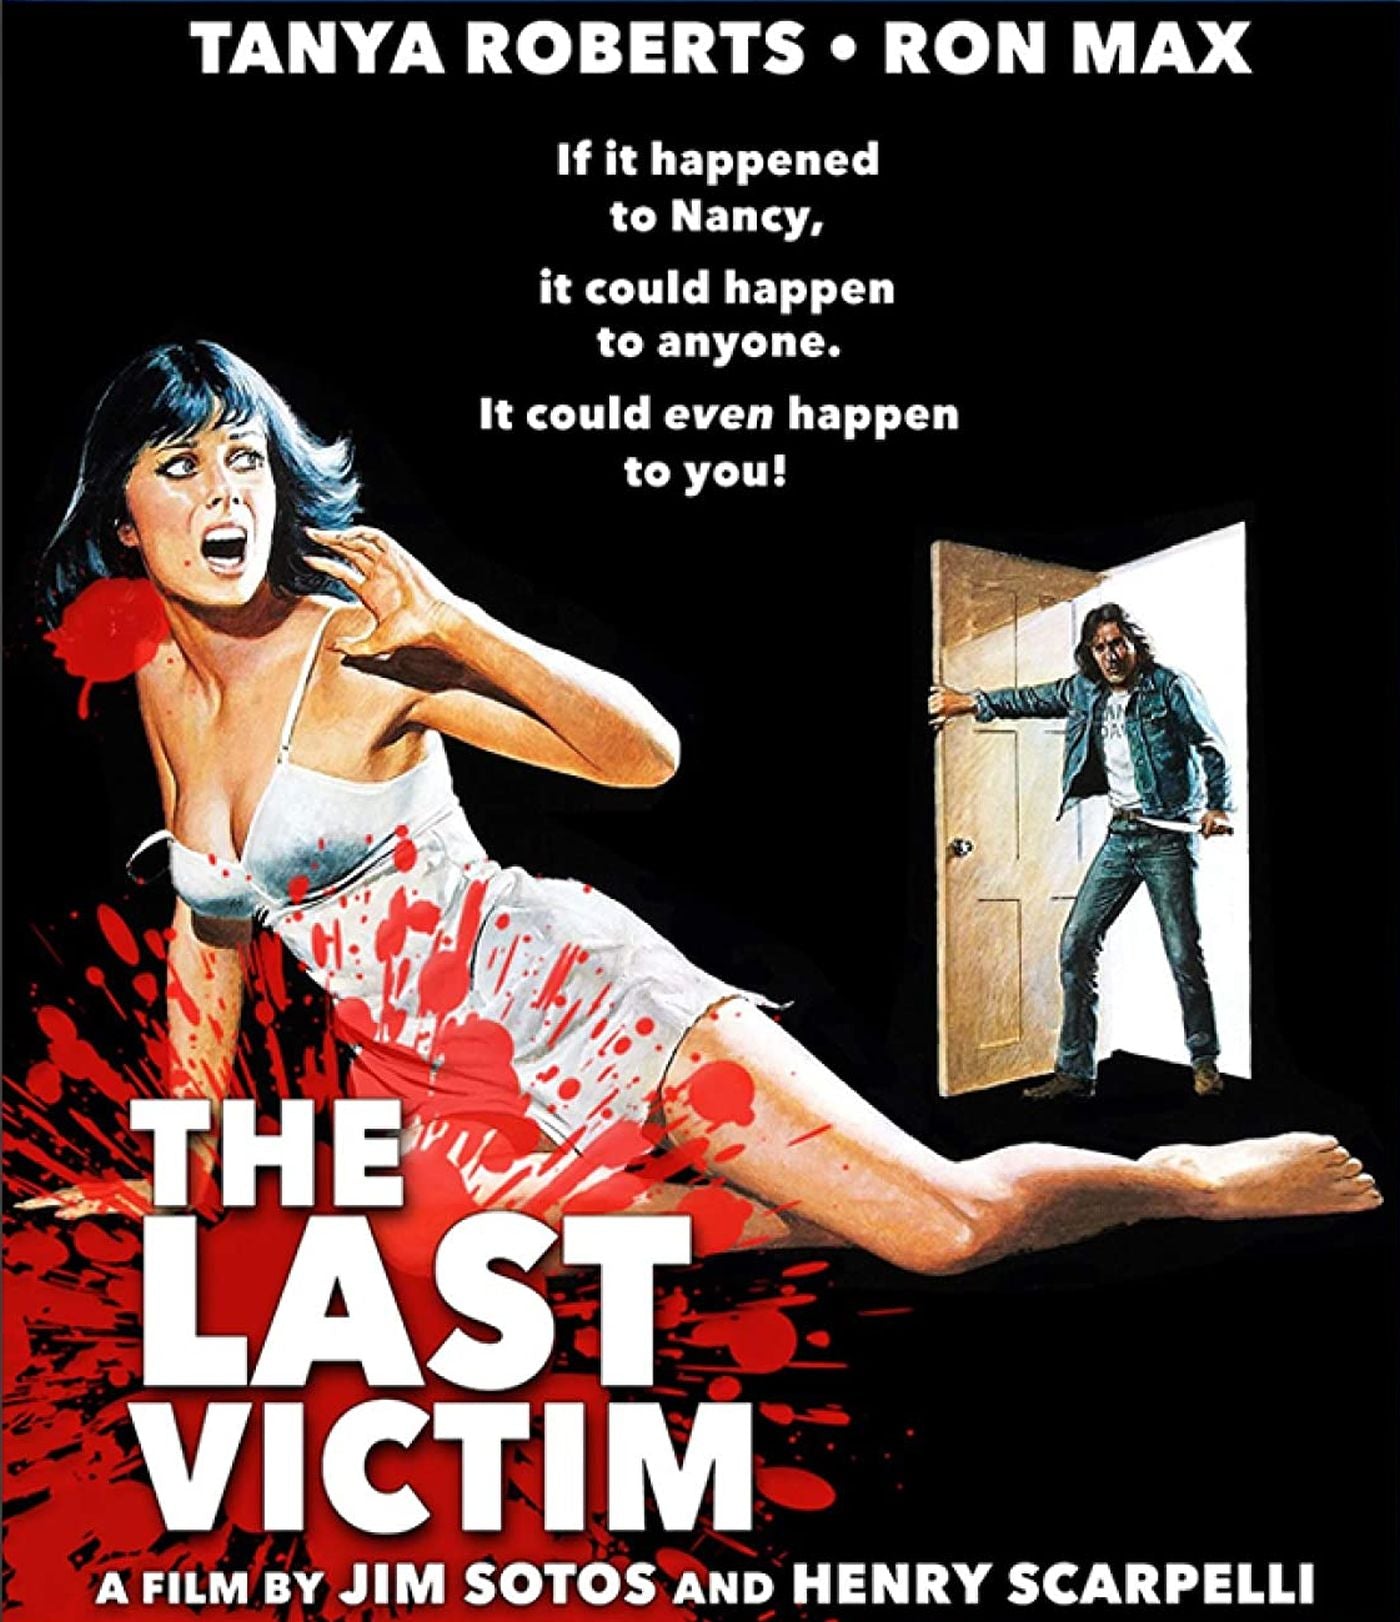 Last Victim [Blu-ray] cover art